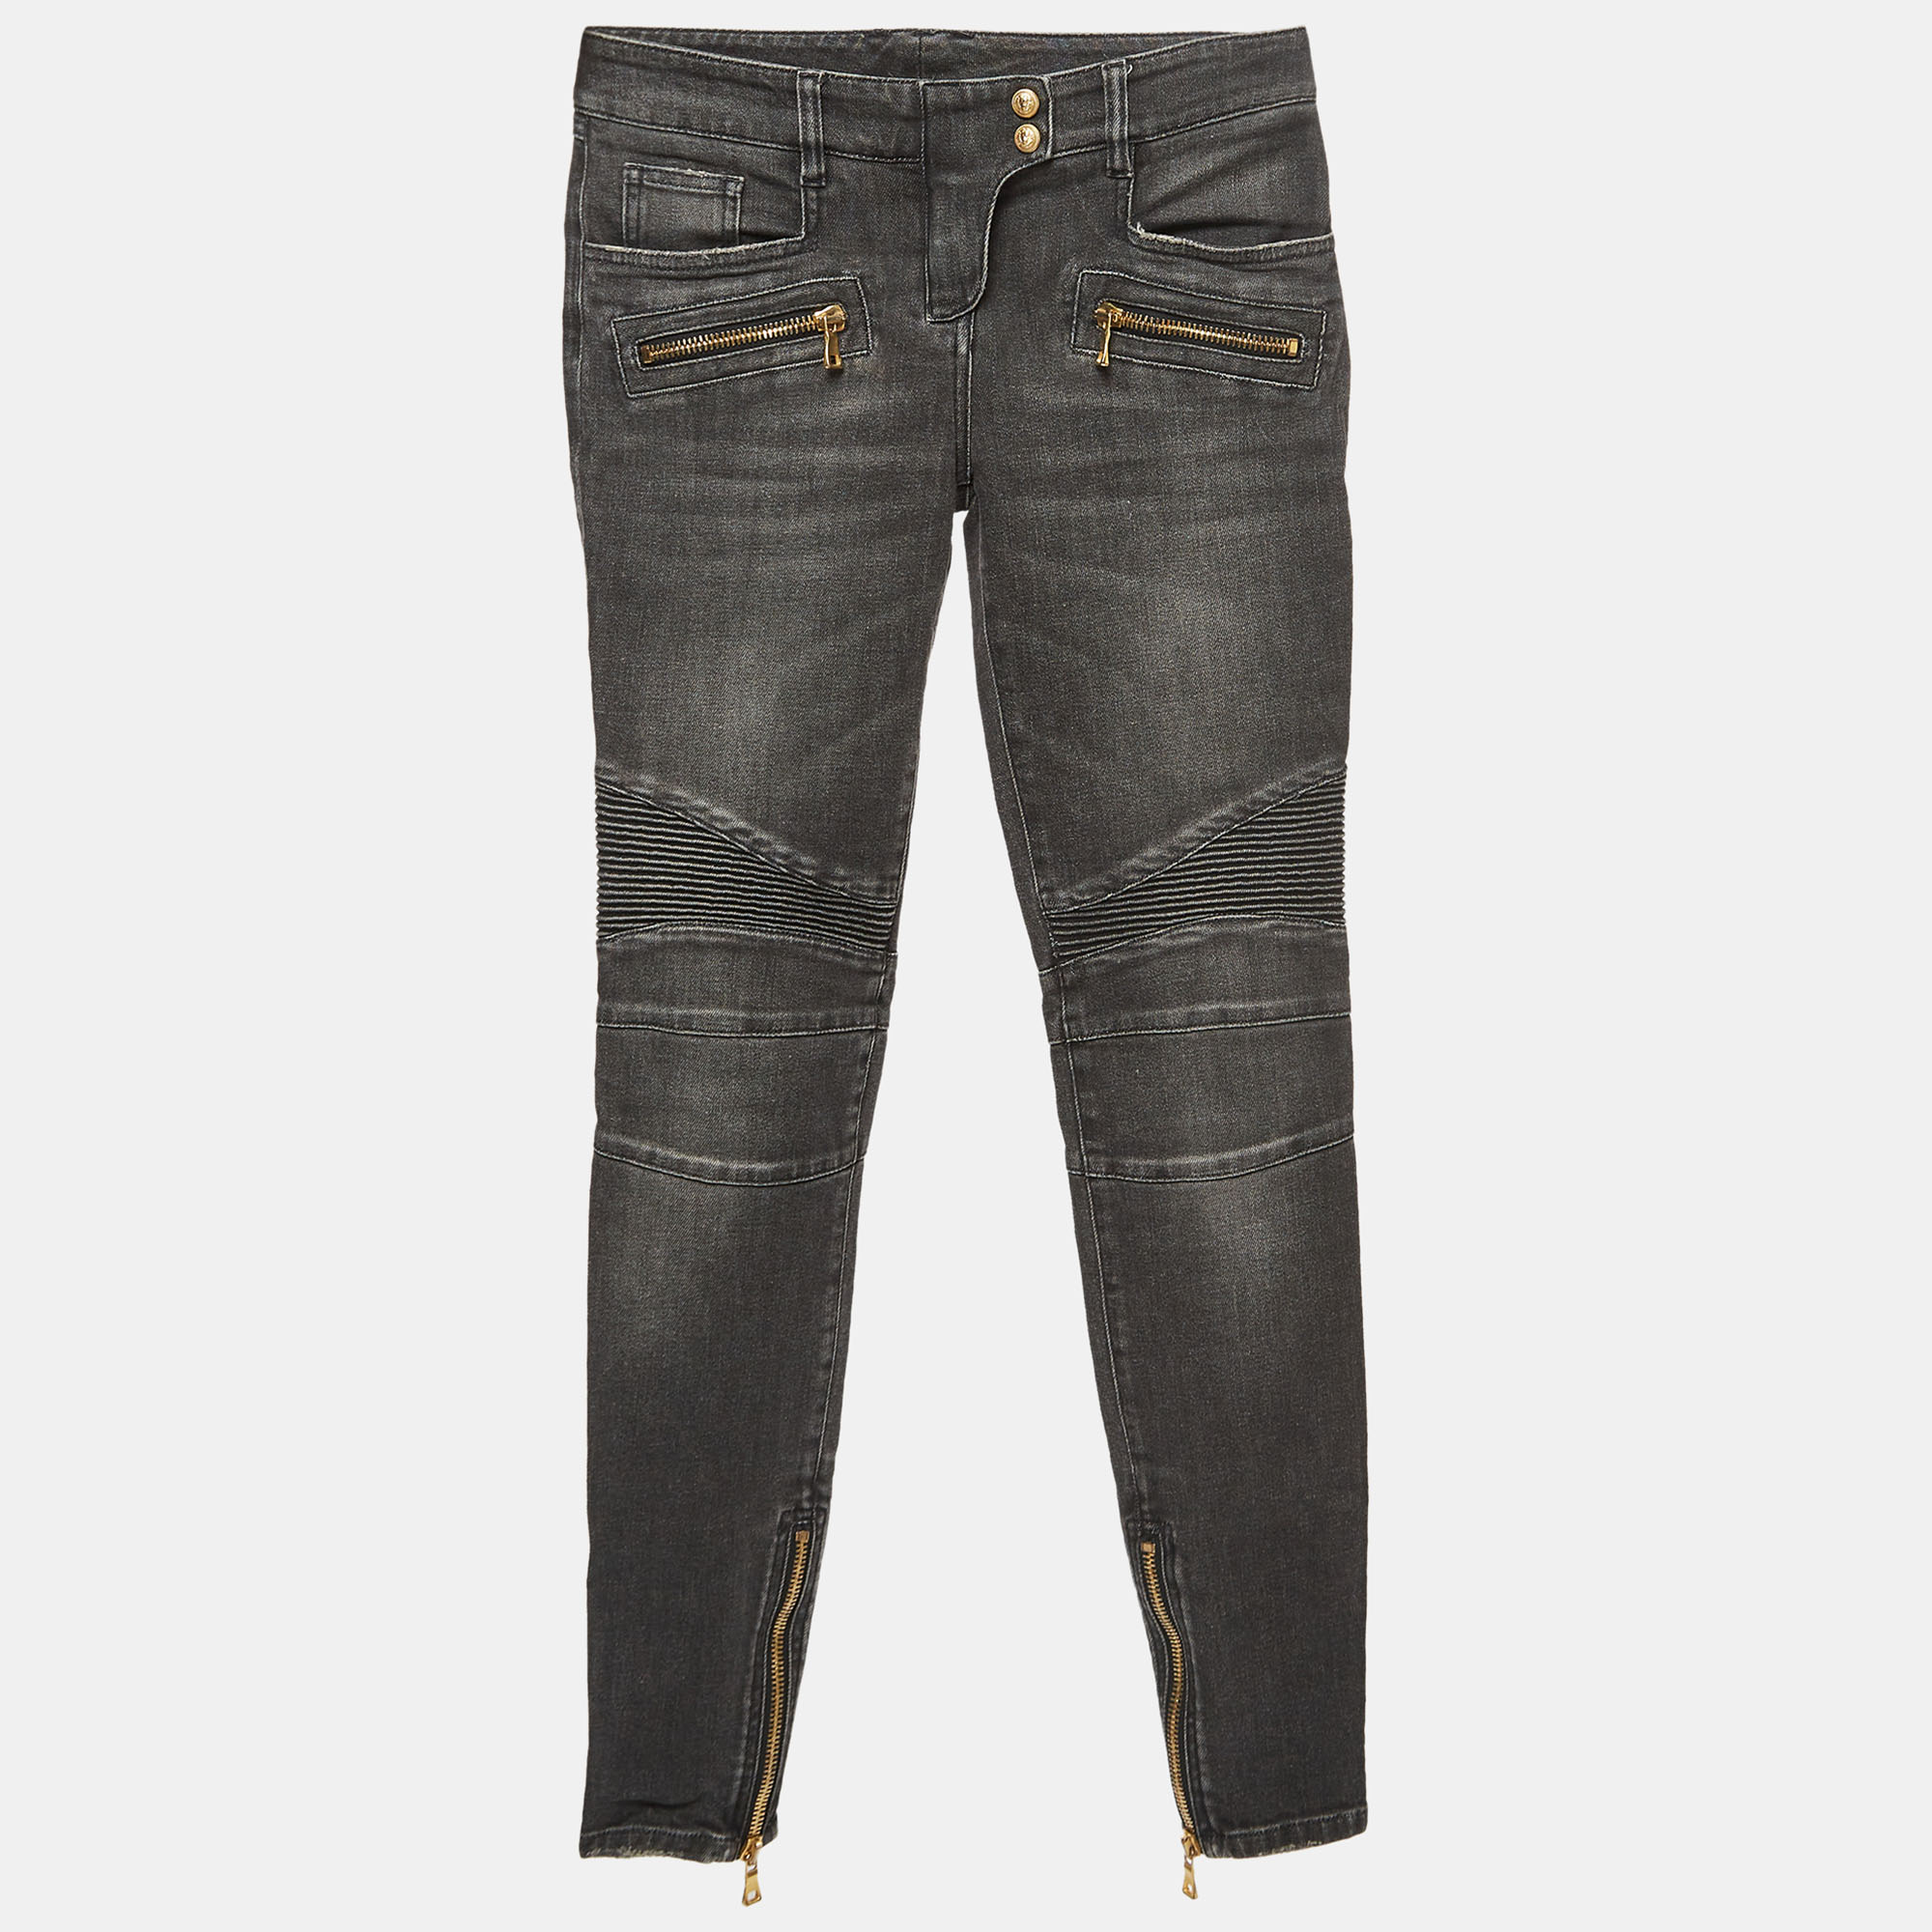 Balmain Grey Washed Denim Slim Fit Jeans S Waist 28